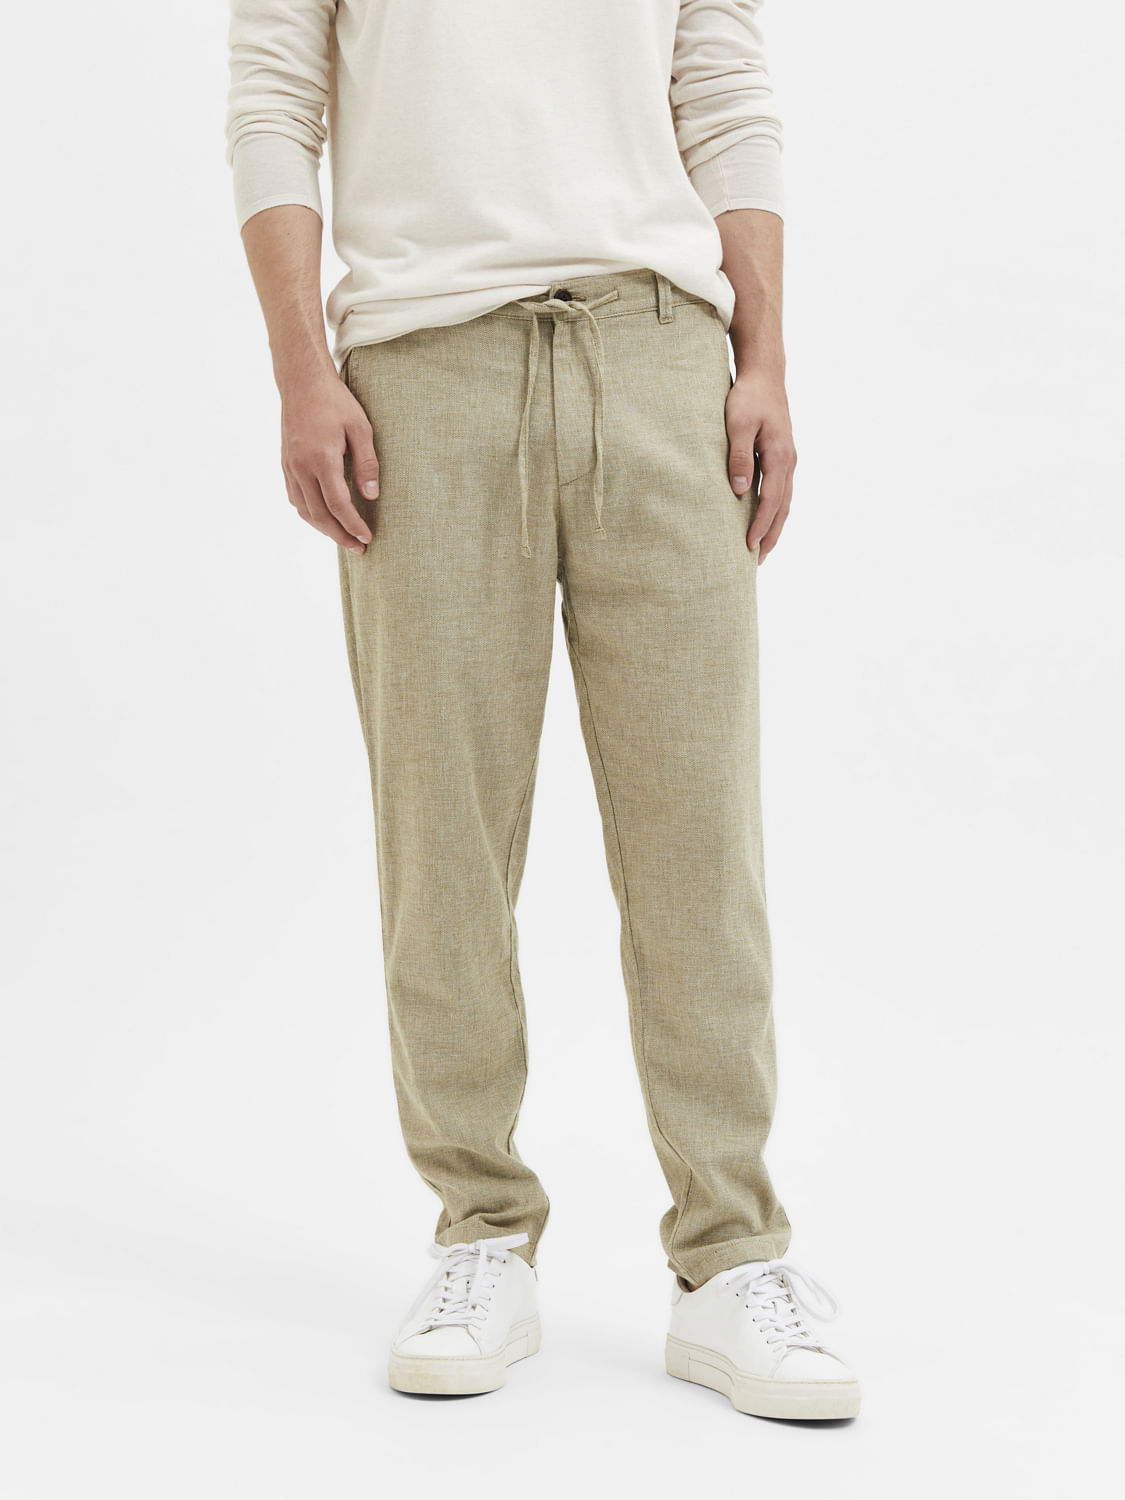 Buy Men's Pants Online At Best Price From Daraz.com.np